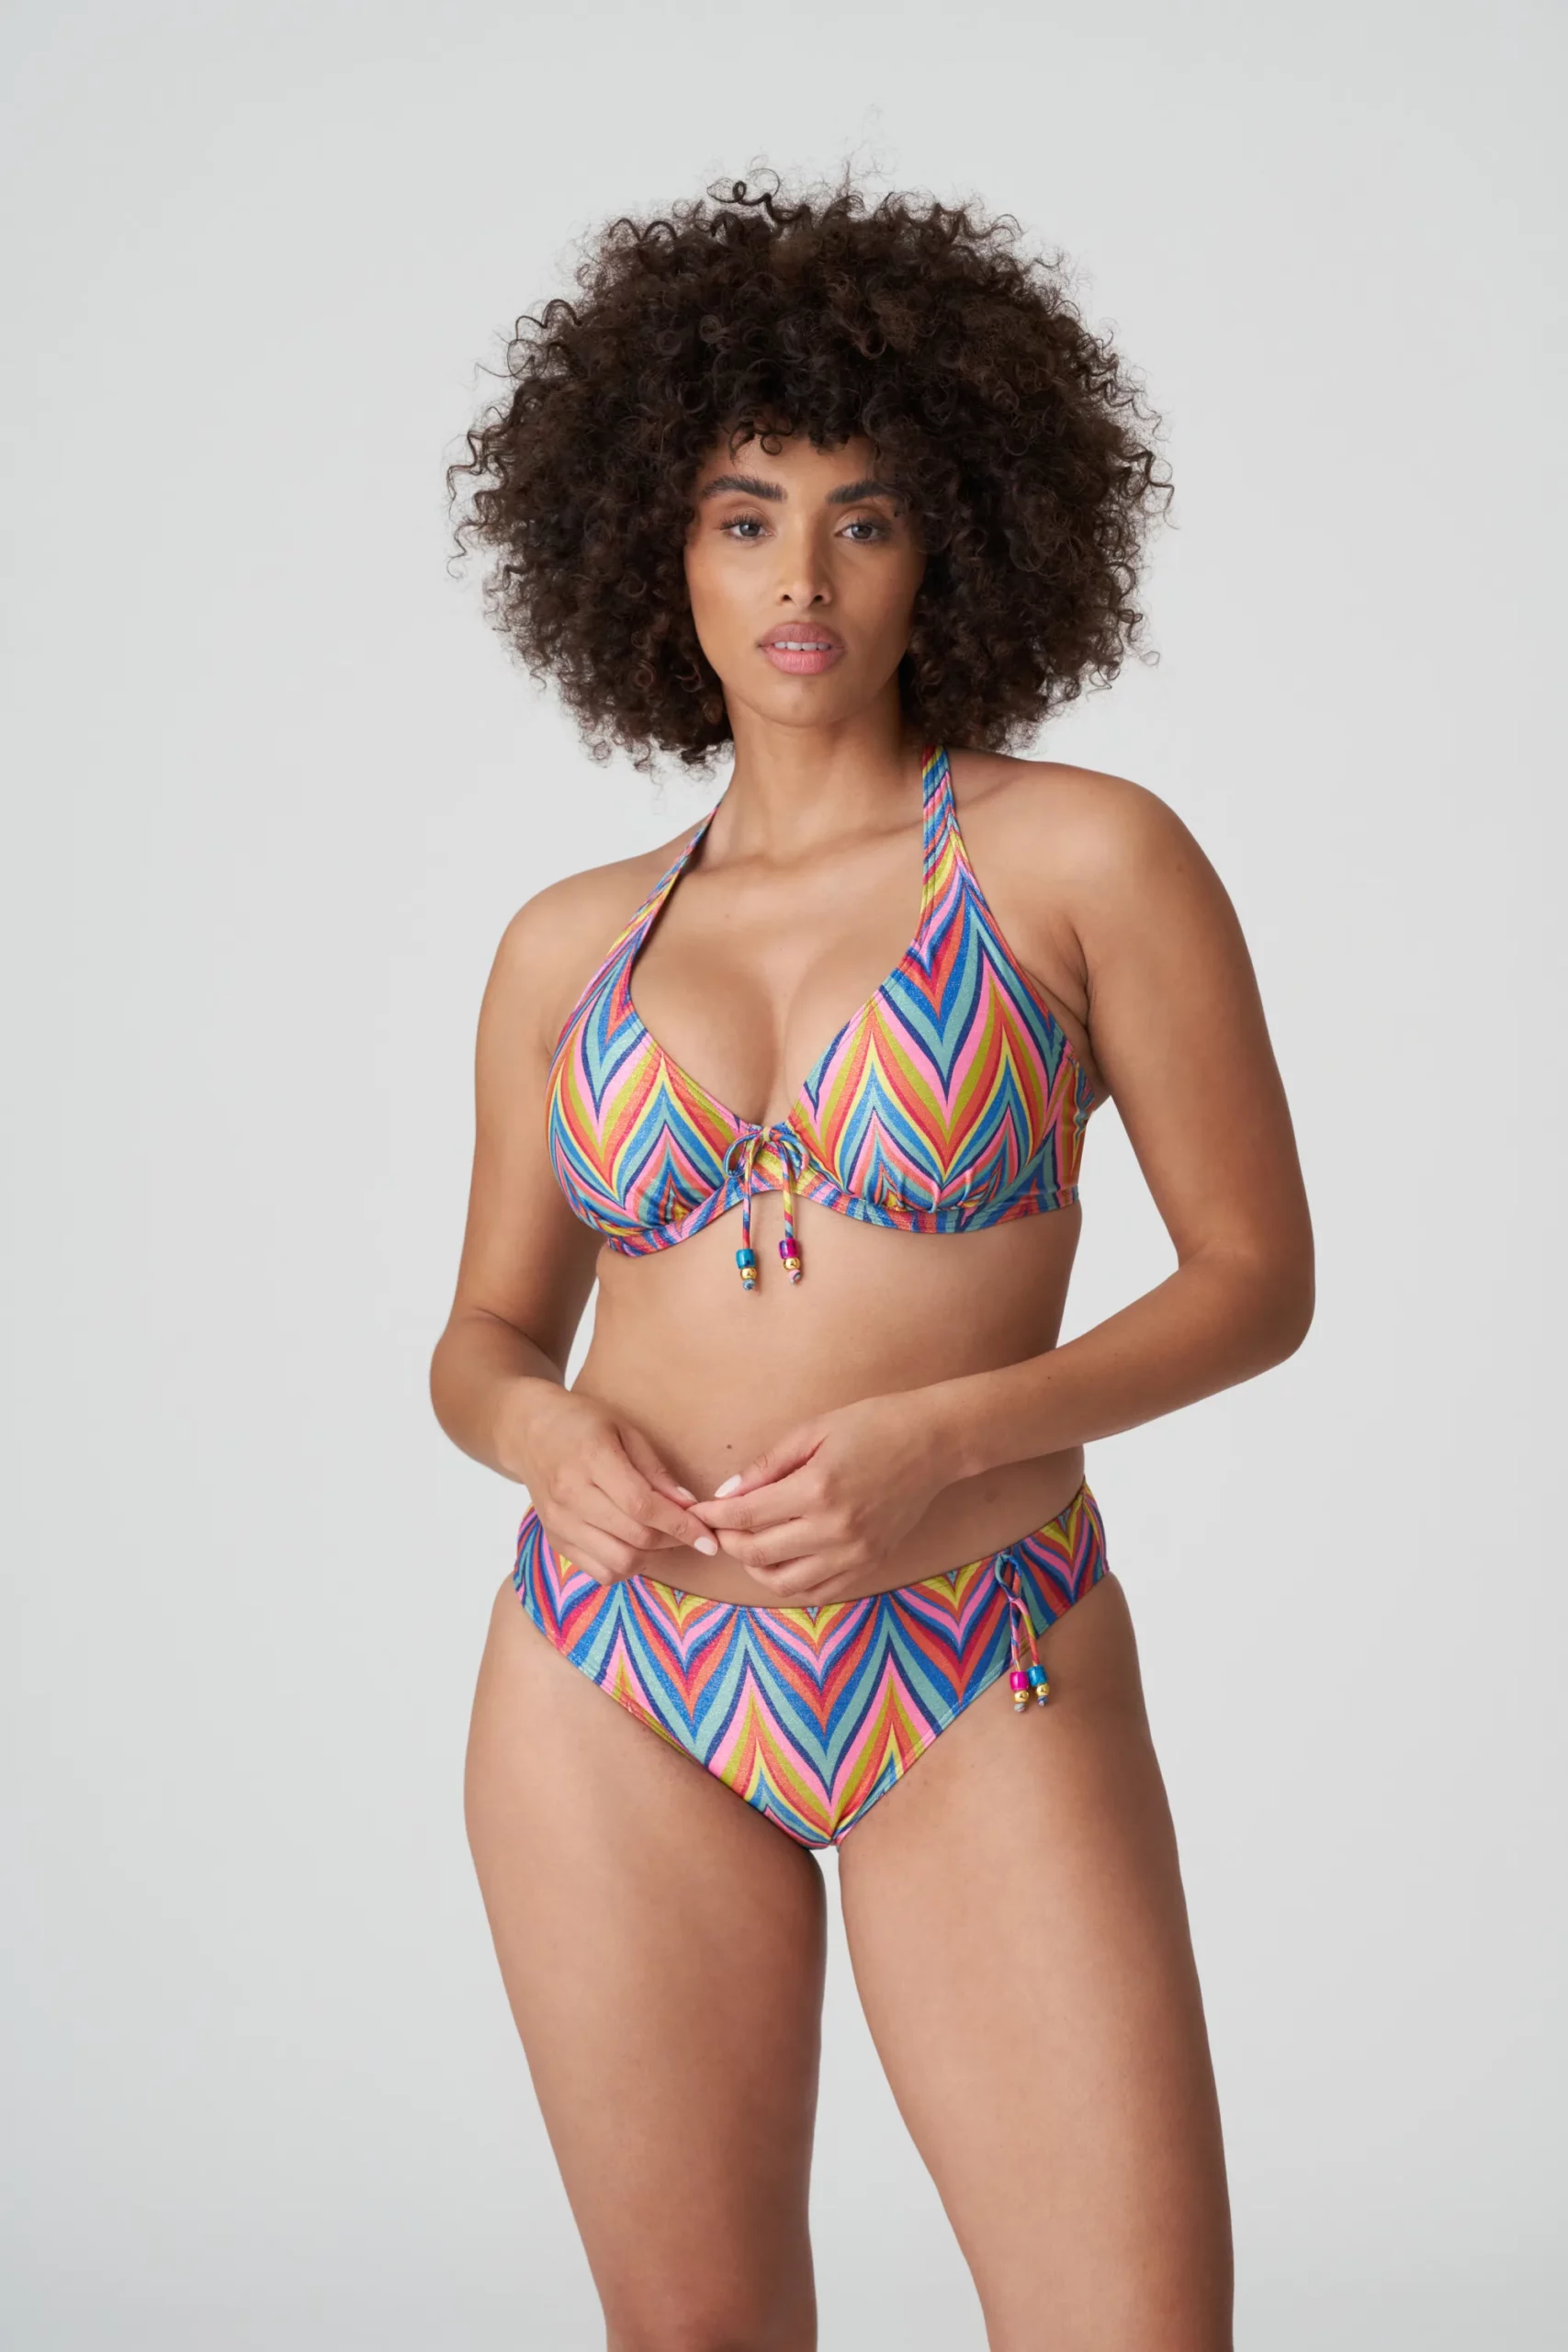 Bellissima Women's Plus Size Padded Bikini Swimsuit: for sale at 31.99€ on